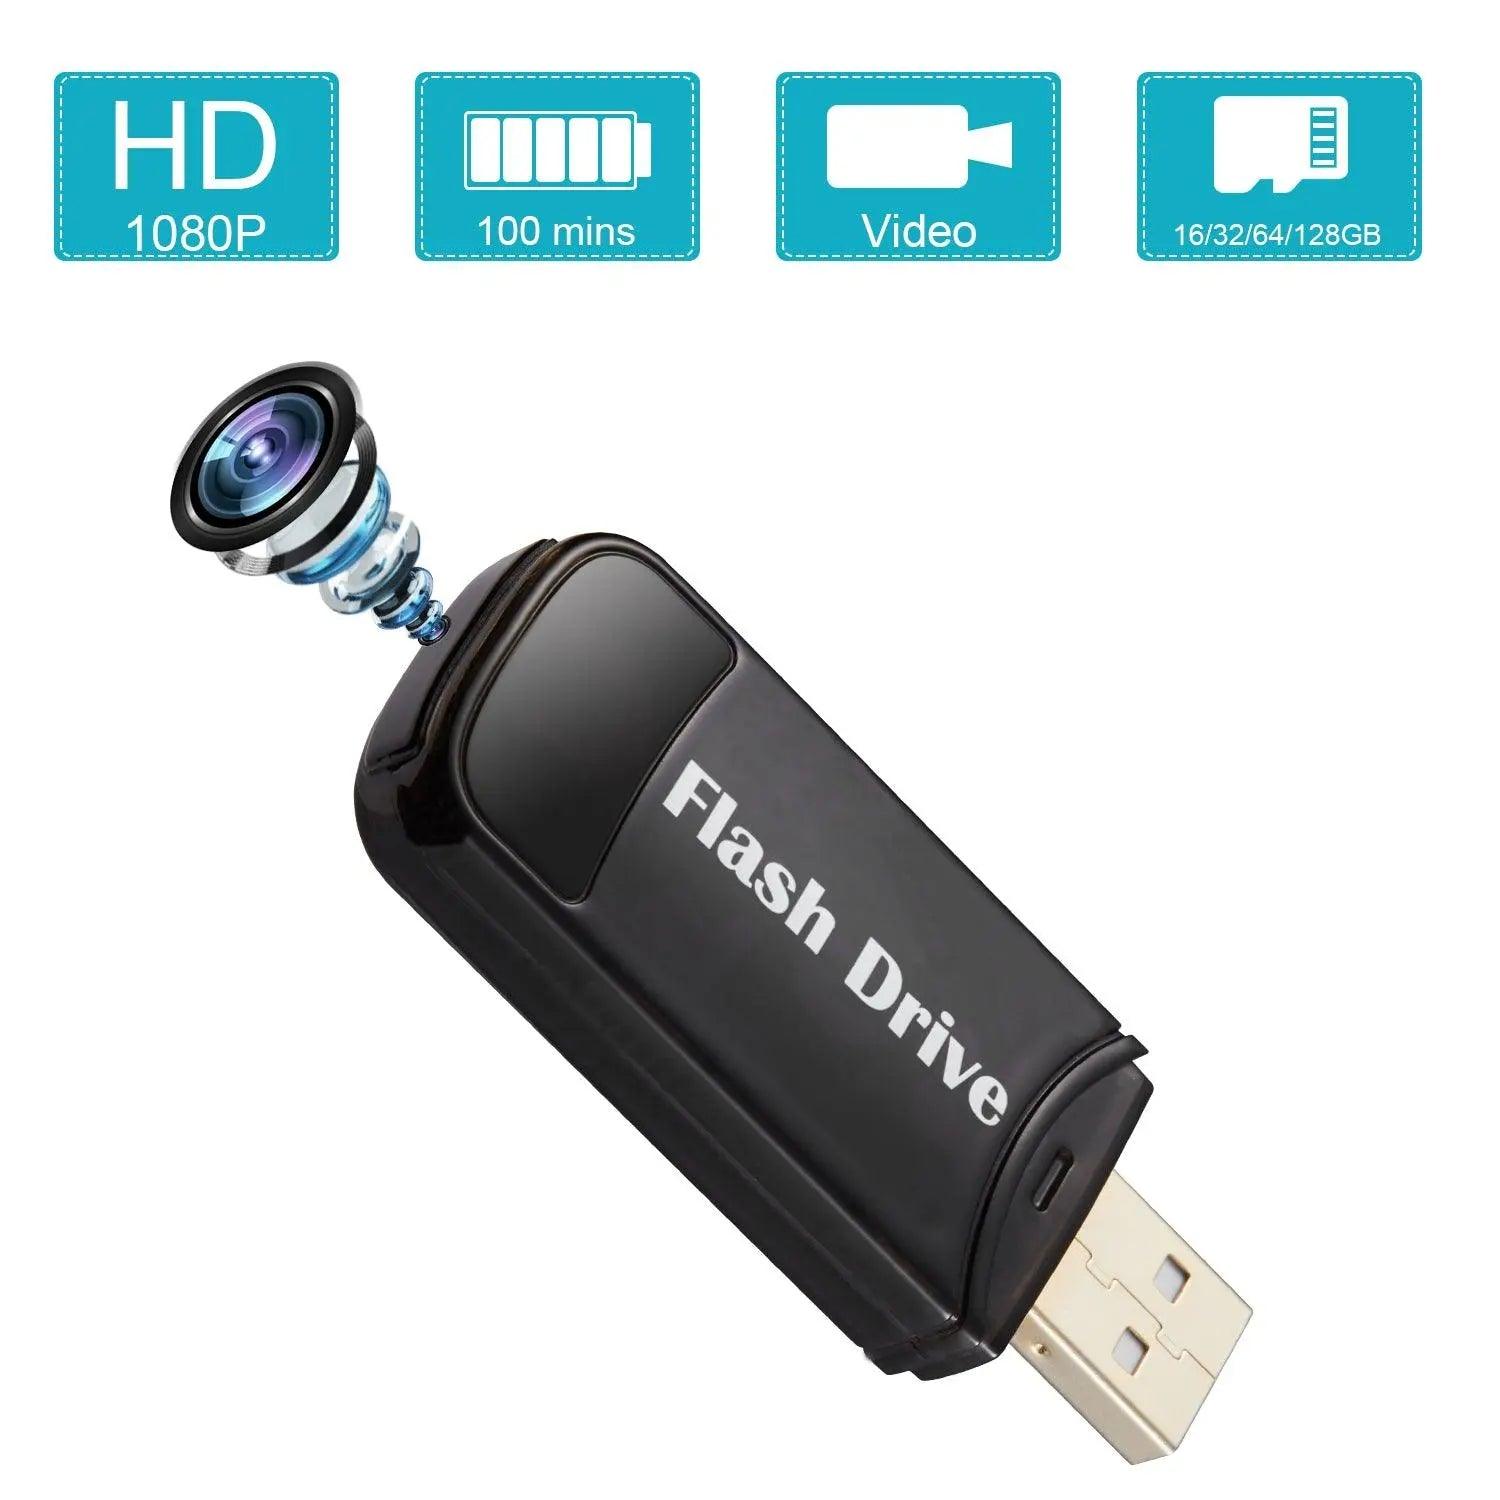 Flash Drive Camera with Invisible Len Body Portable Out Door Hidden Camera - Swayfer Tech